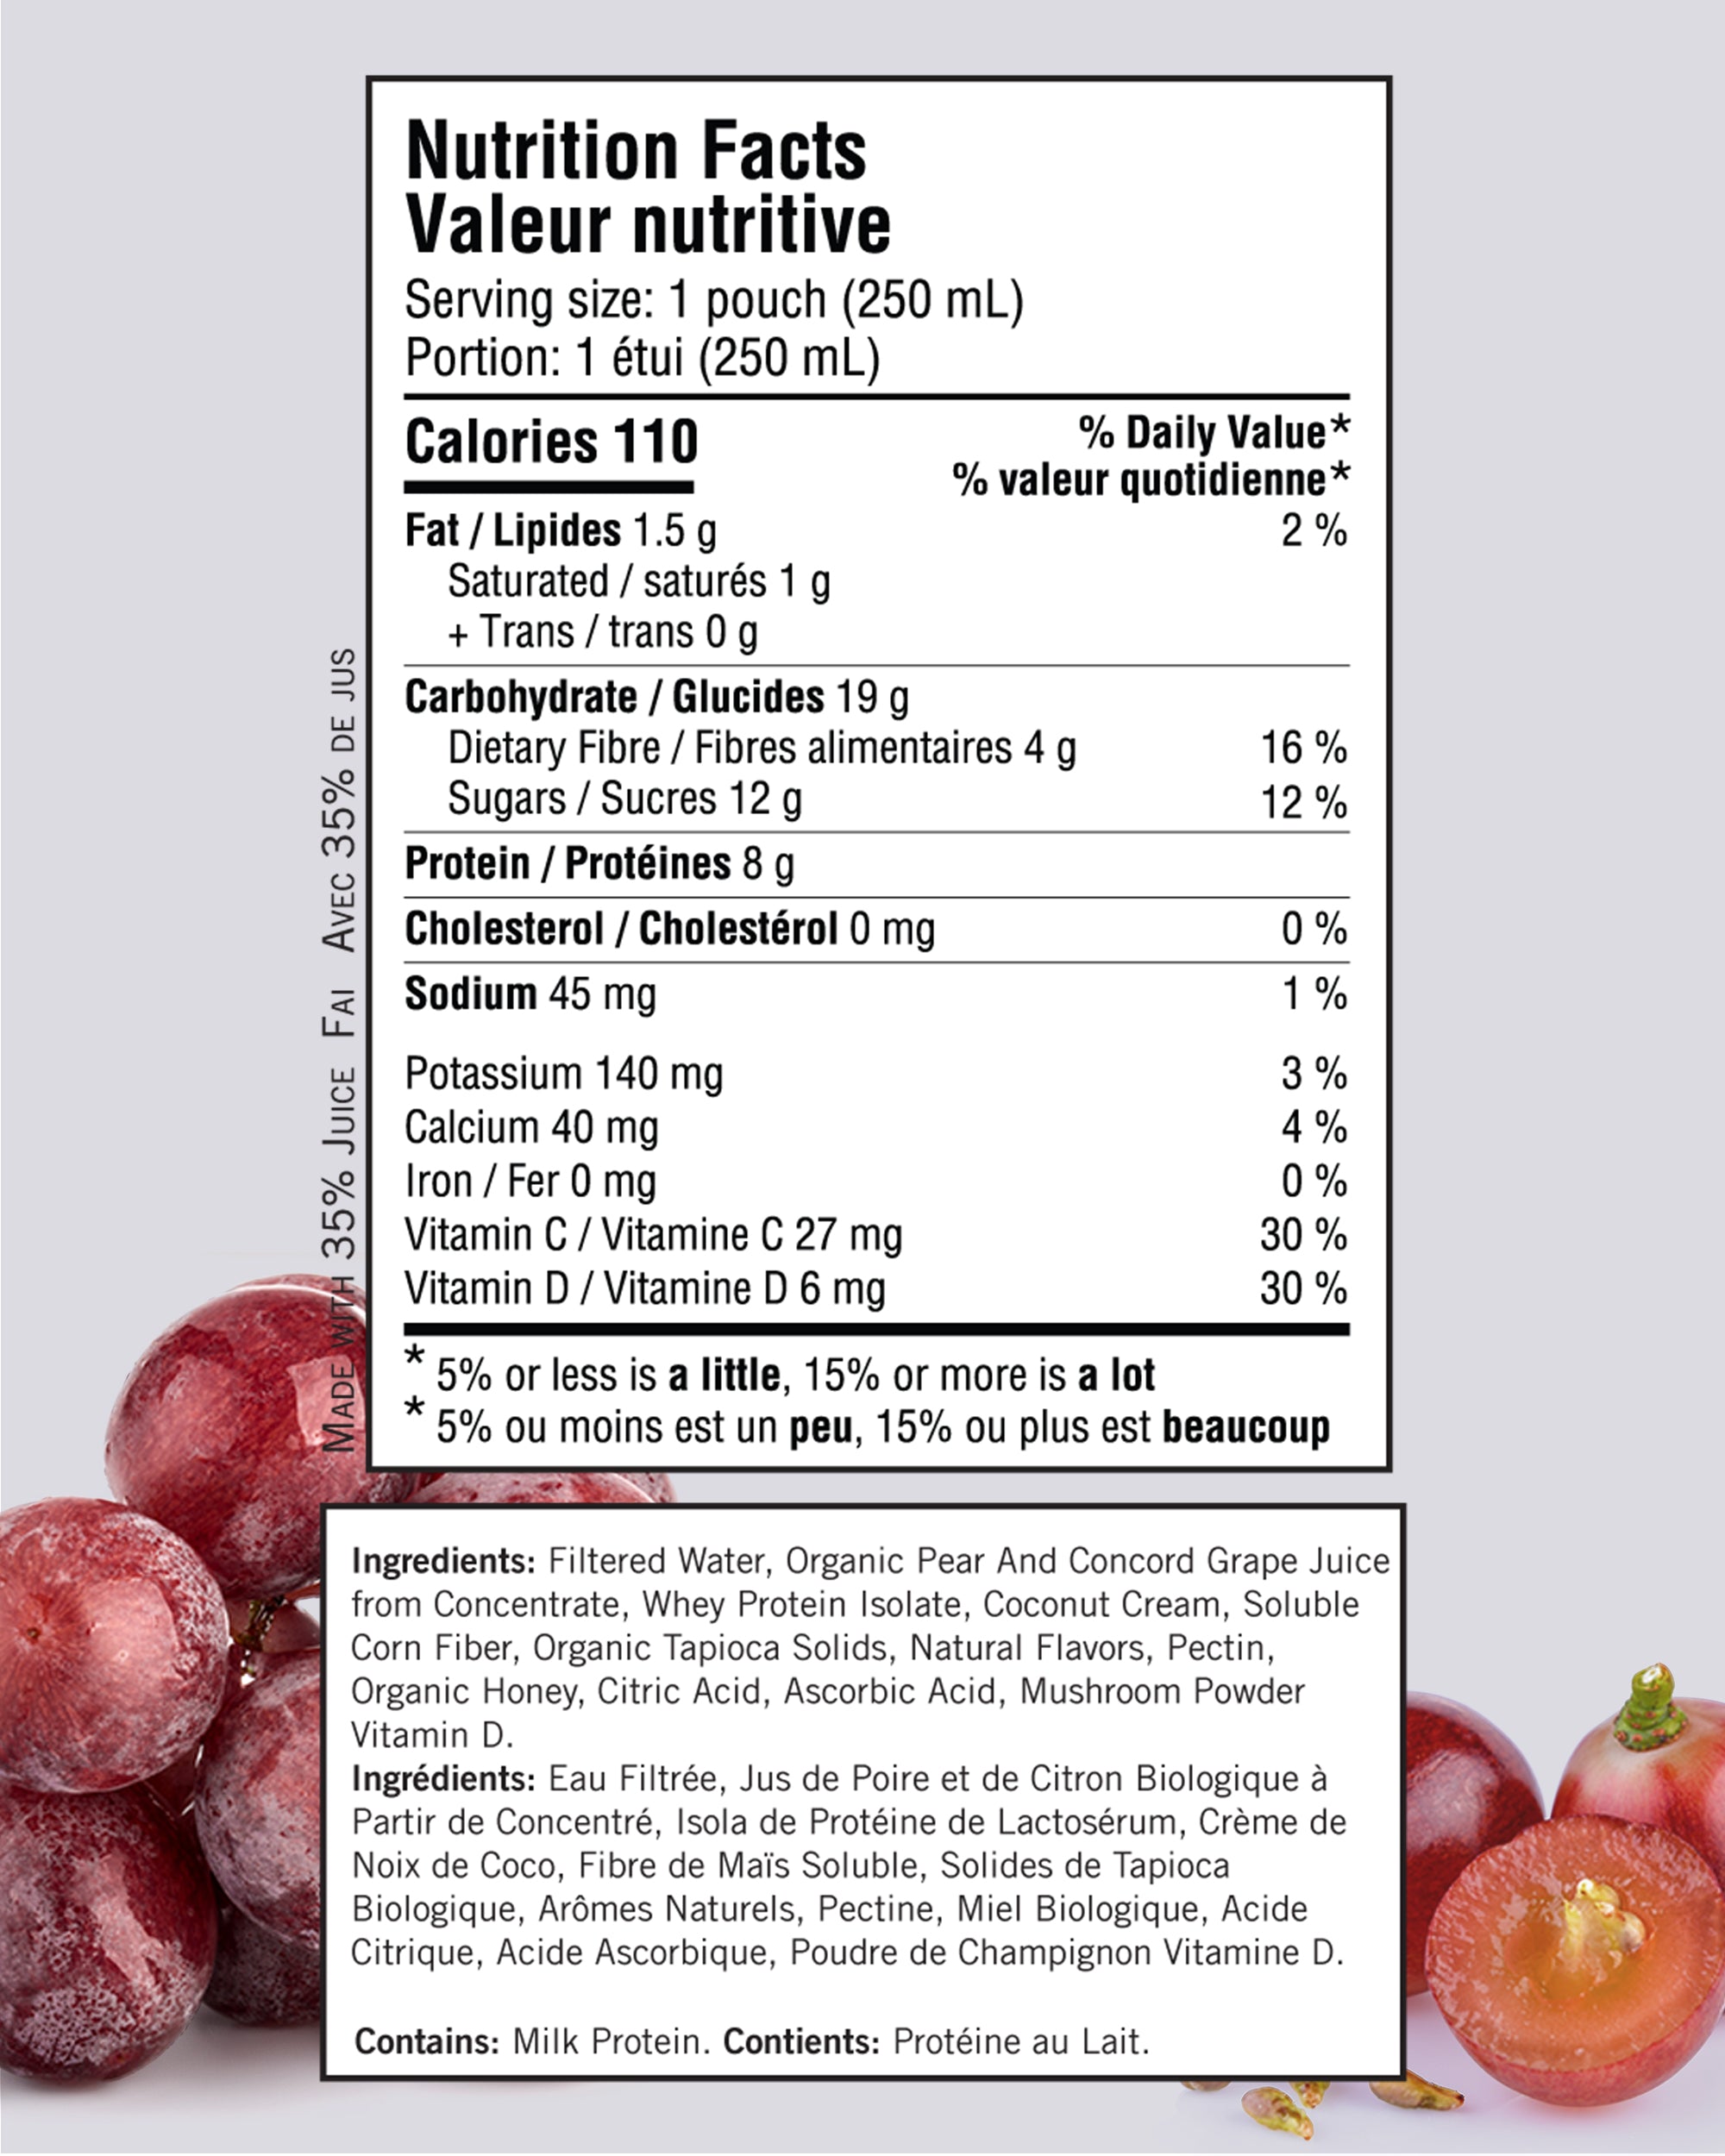 Grape Aspirations - 12 pouches per case